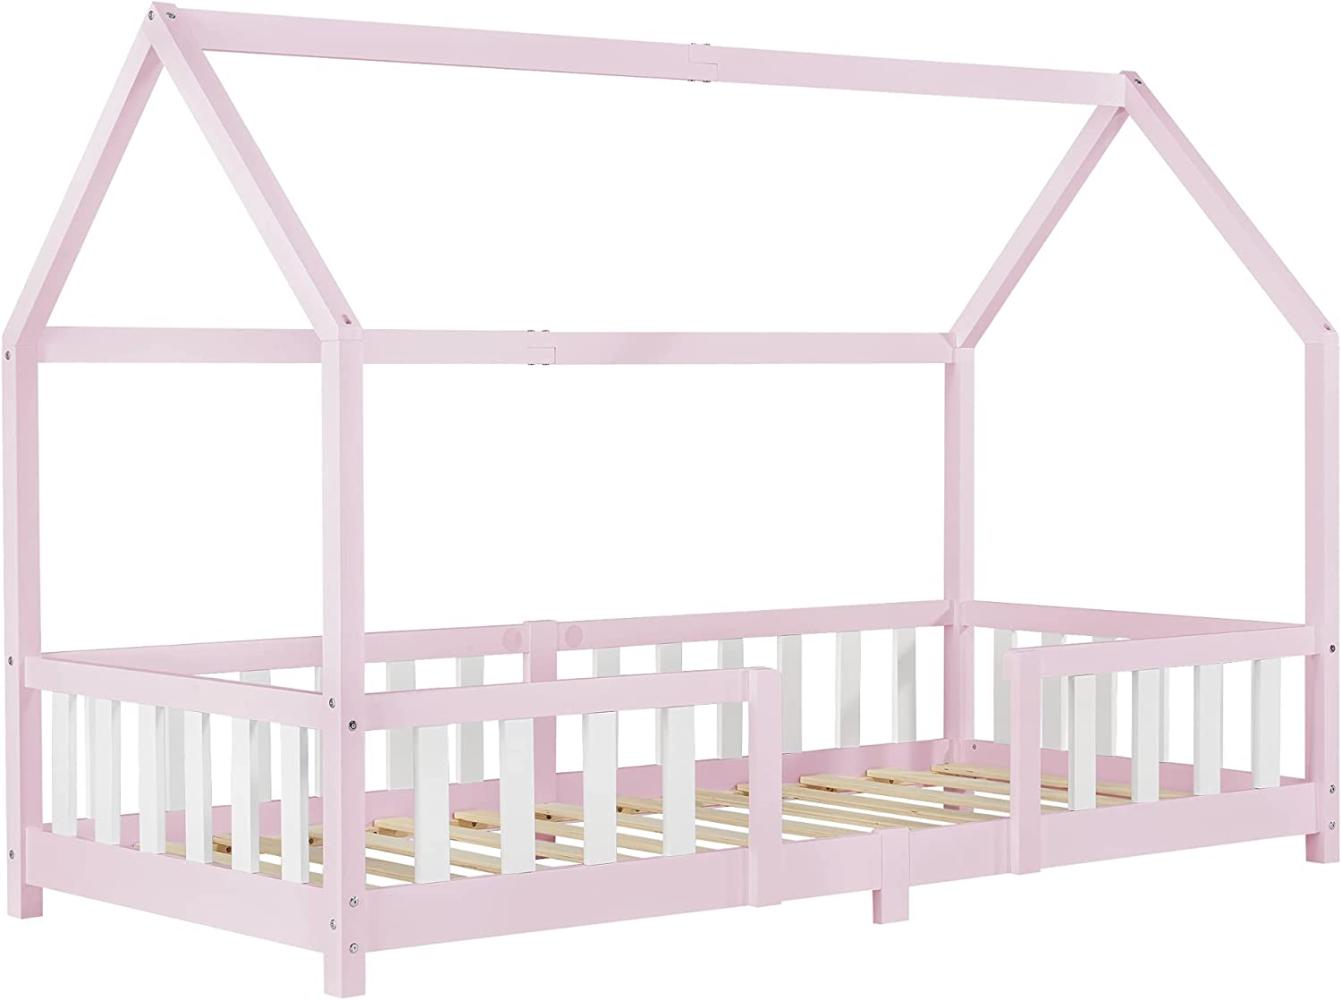 en.casa 'Sisimiut' Hausbett 90x200 cm, rosa/weiß, Kieferholz, inkl. Rausfallschutz und Lattenrost Bild 1